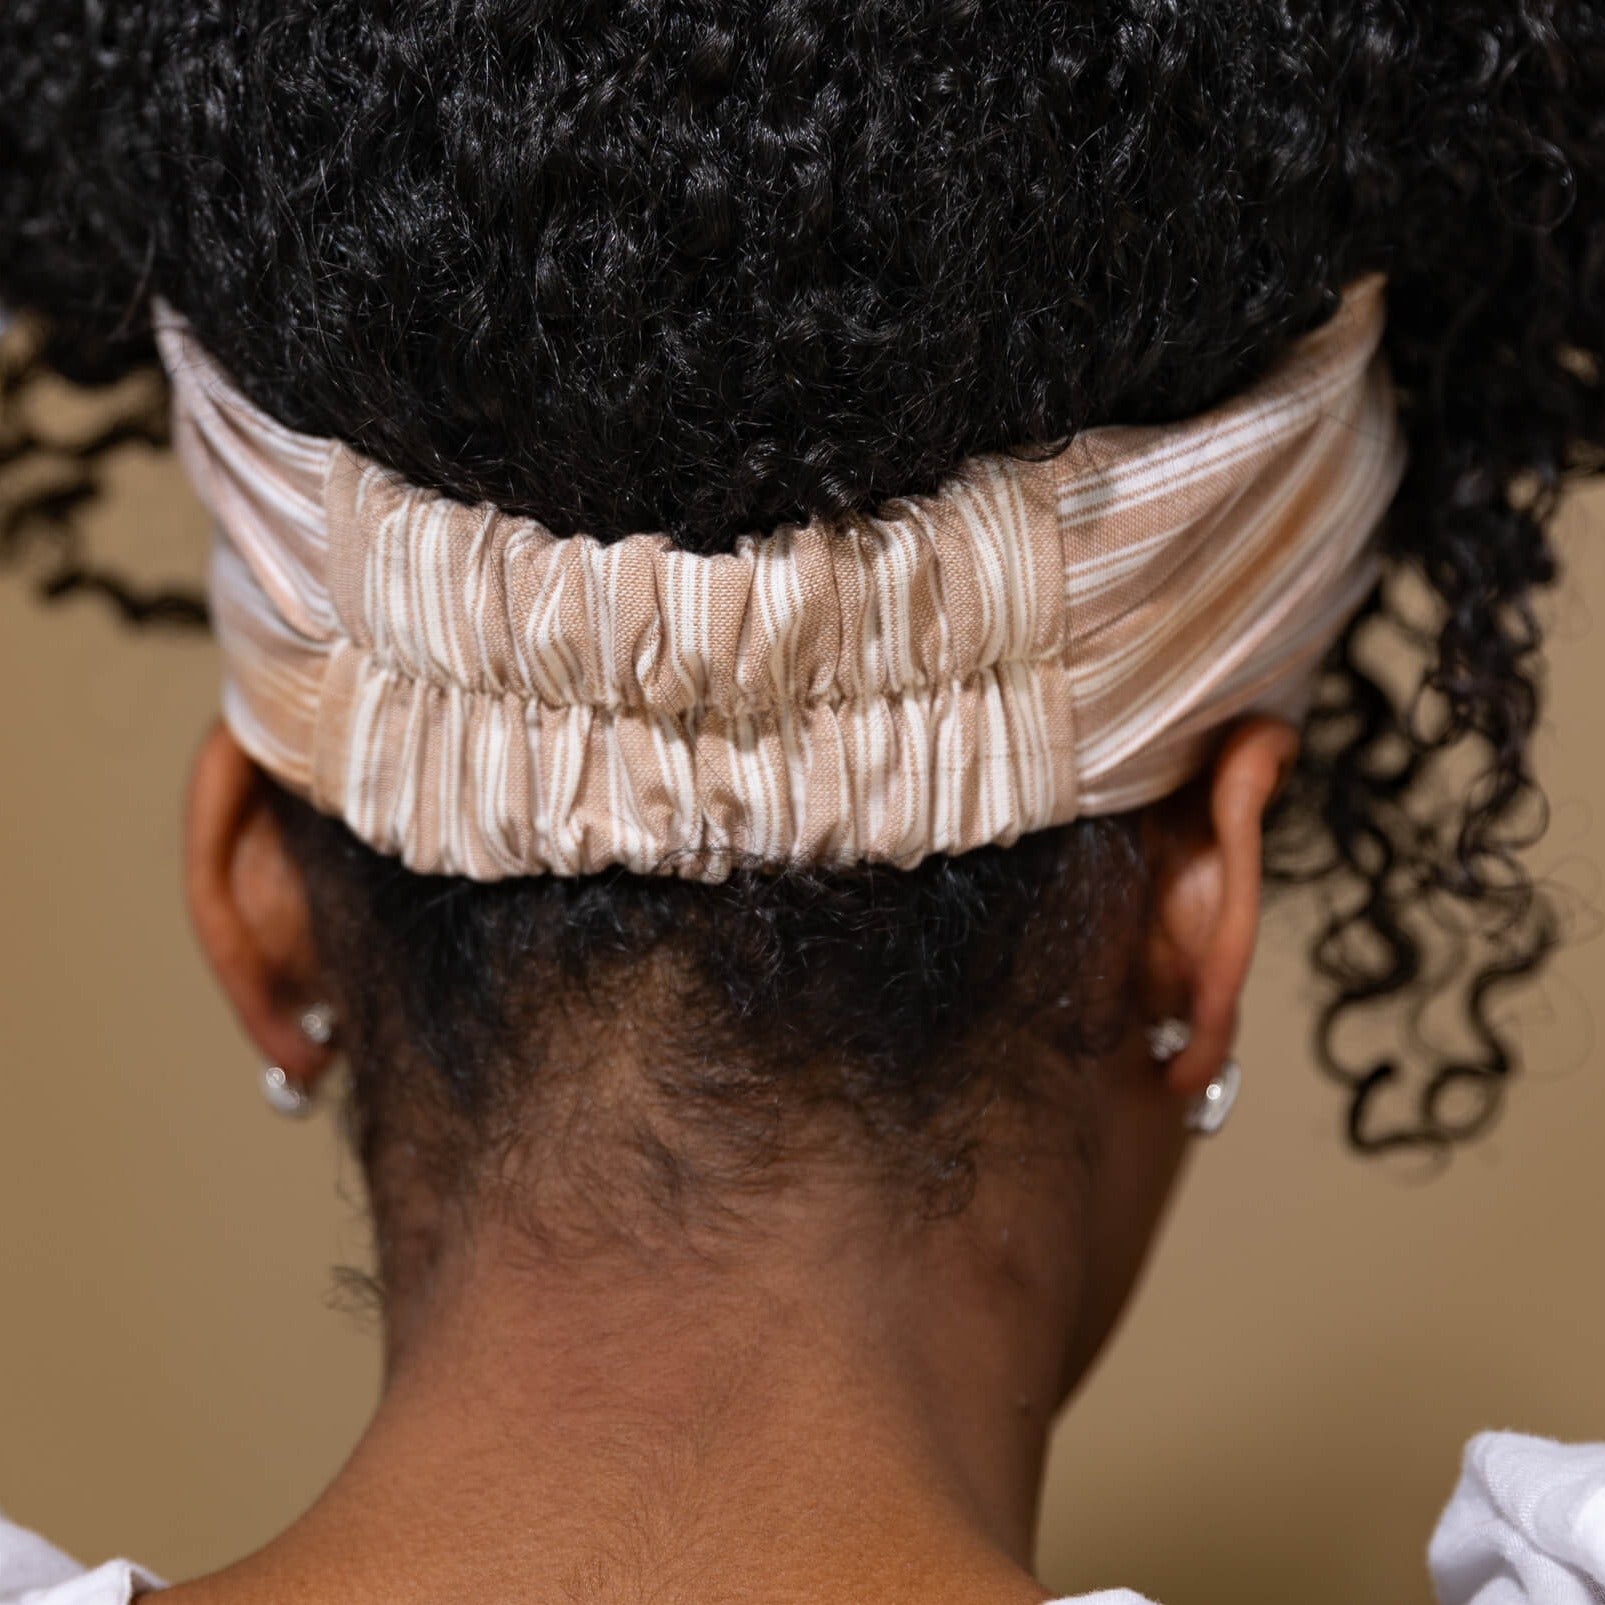 Khaki Tan and White Stripe Pattern Woven Cotton Twisted Headband